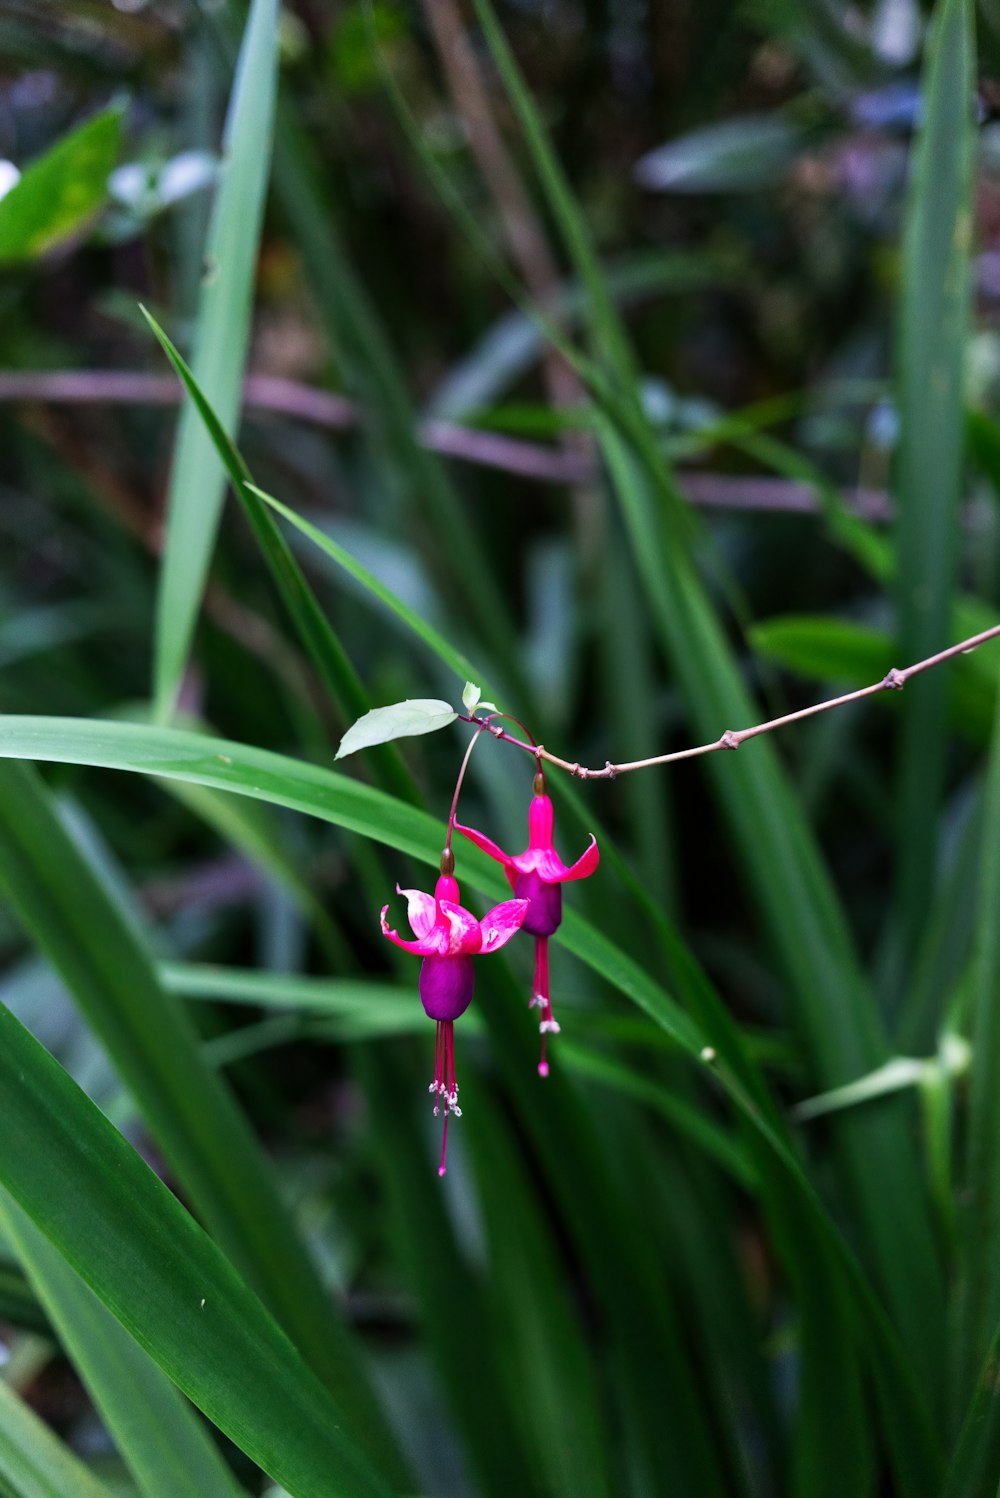 pink flower in green grass